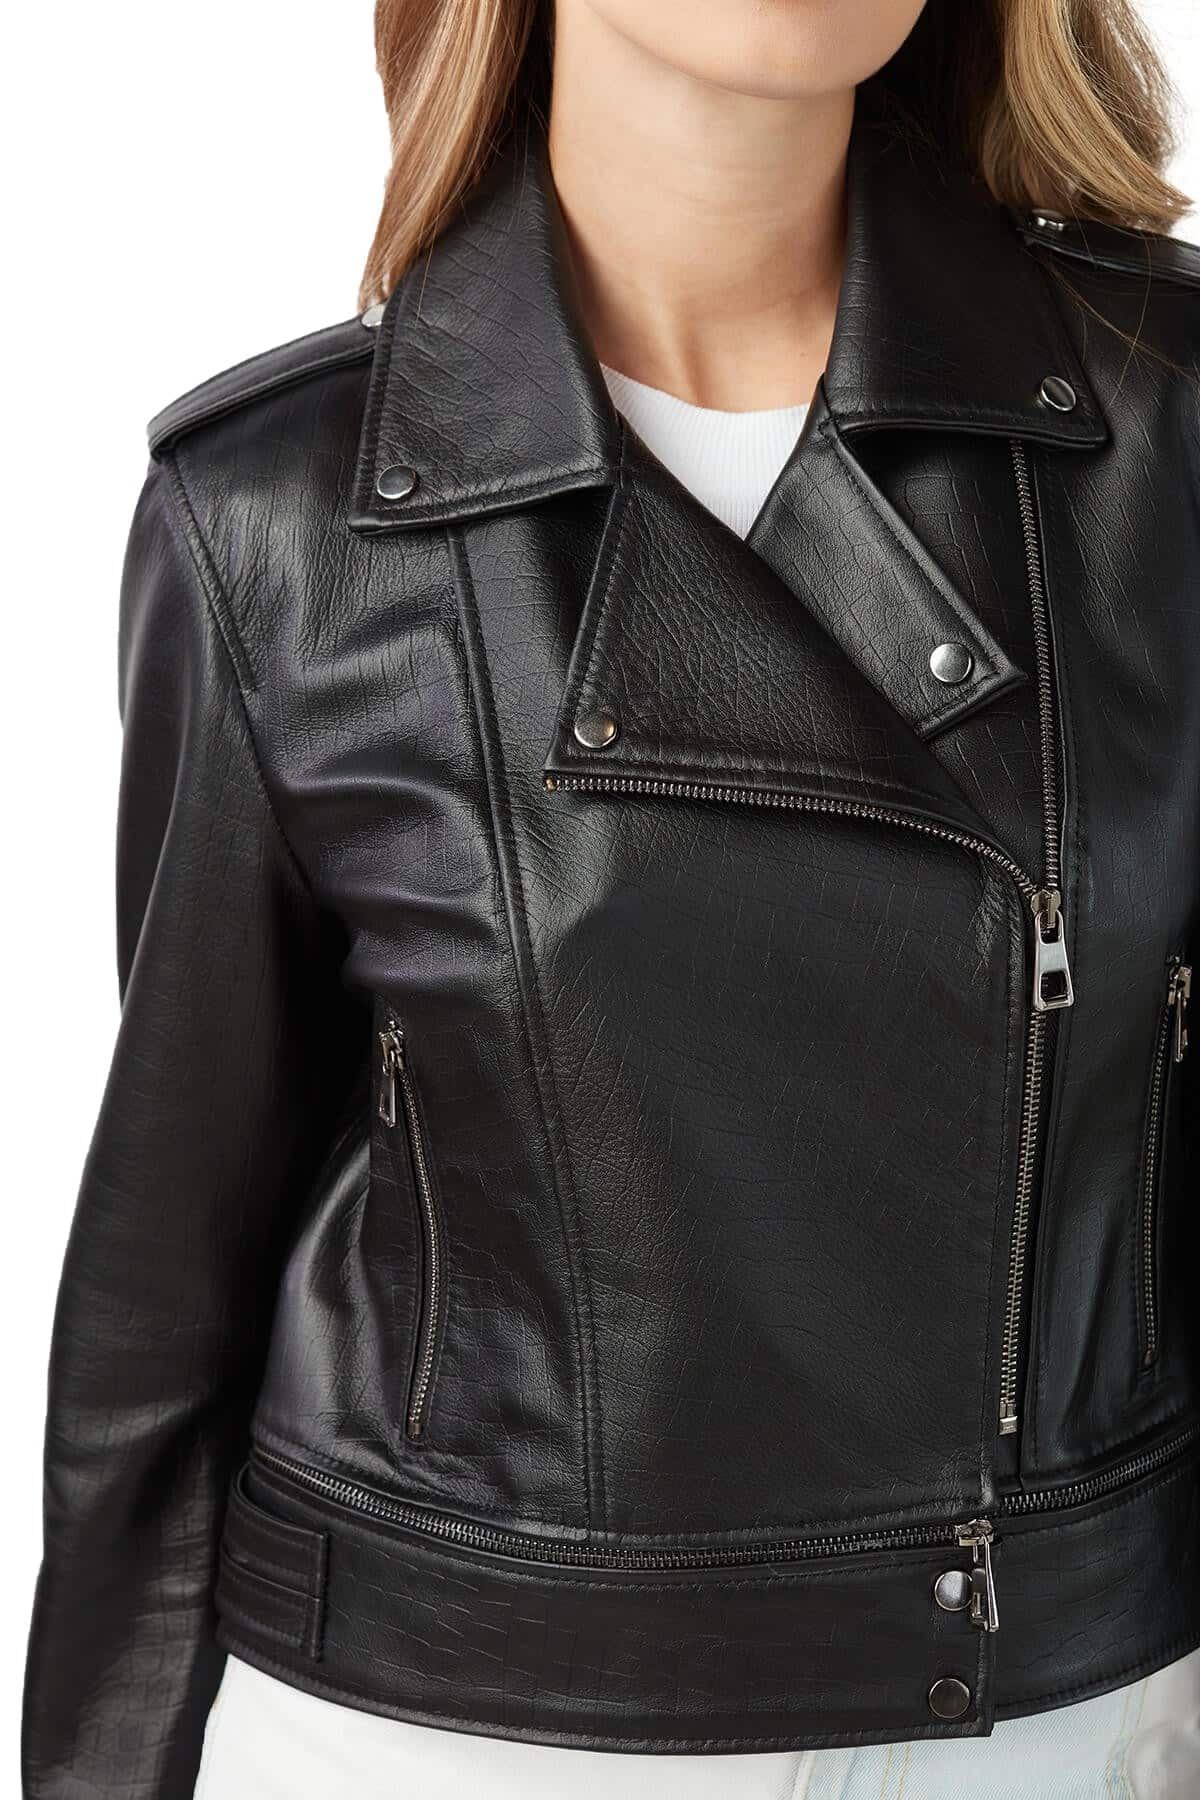 Lorna Jane Women's Black Alice Moto Biker Faux Leather Athletic Jacket Small  - $49 - From Savannah